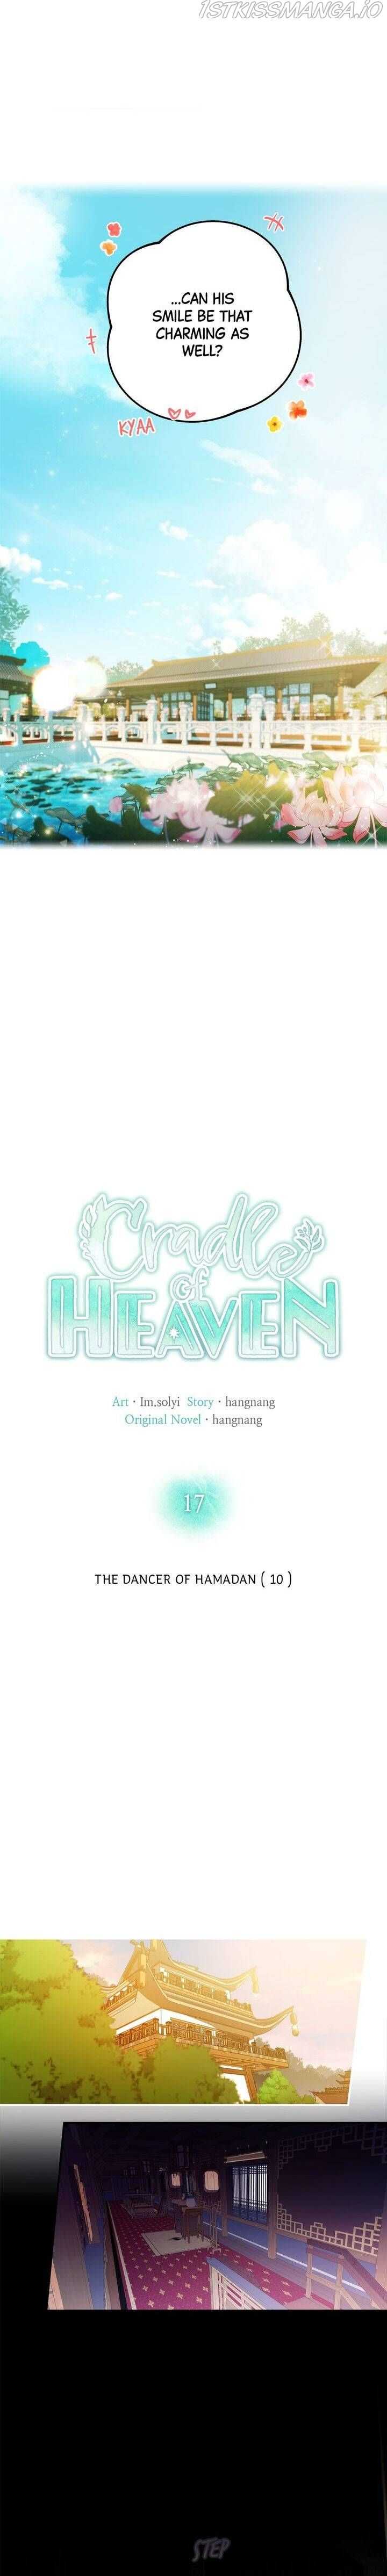 Cradle of Heaven chapter 17